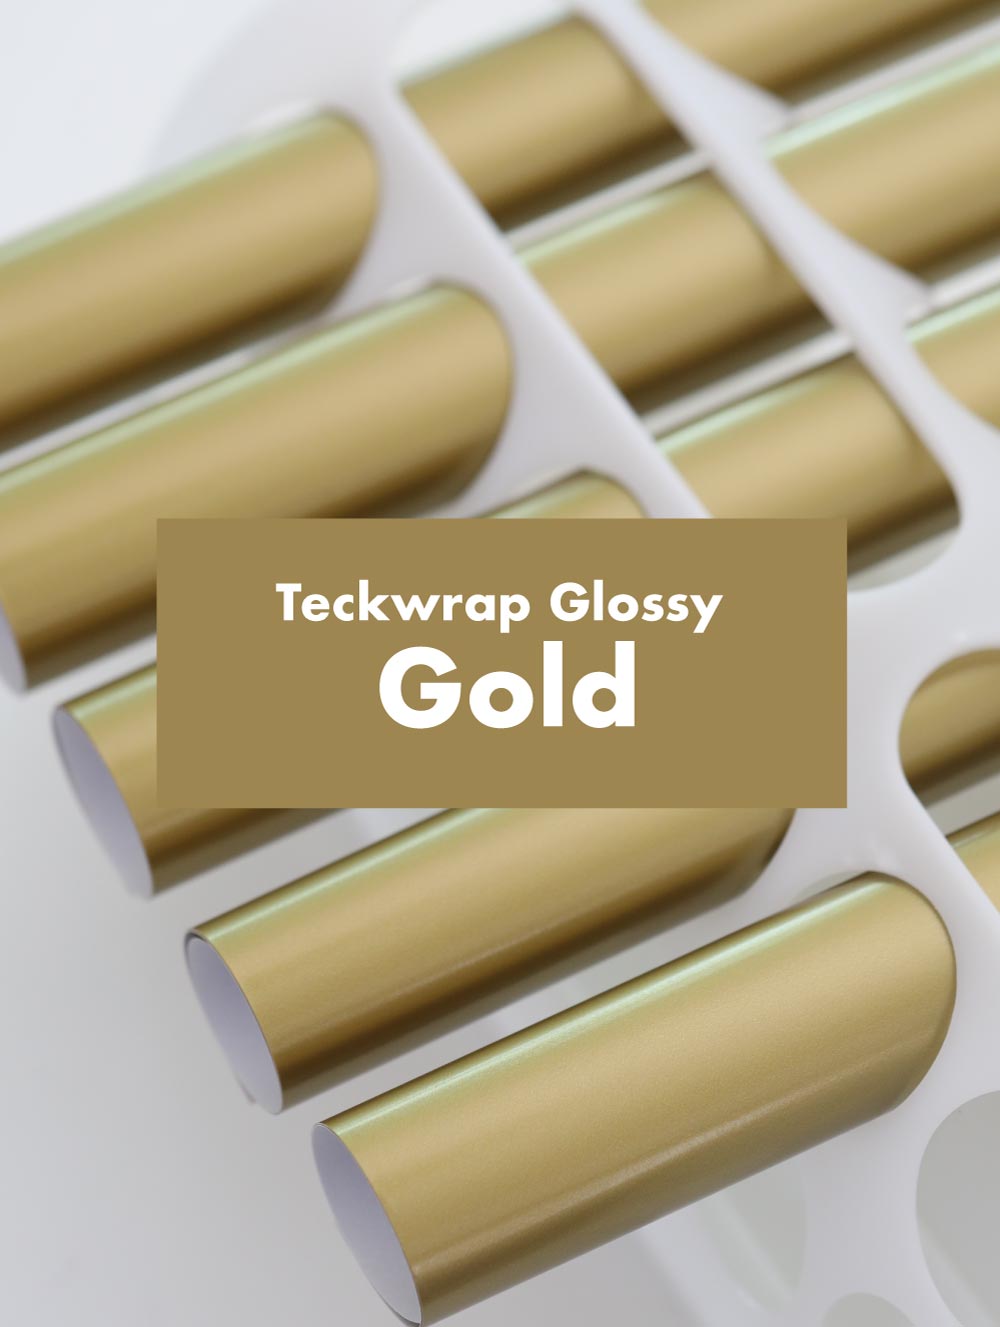 Teckwrap Glossy Adhesive Vinyl Stickers